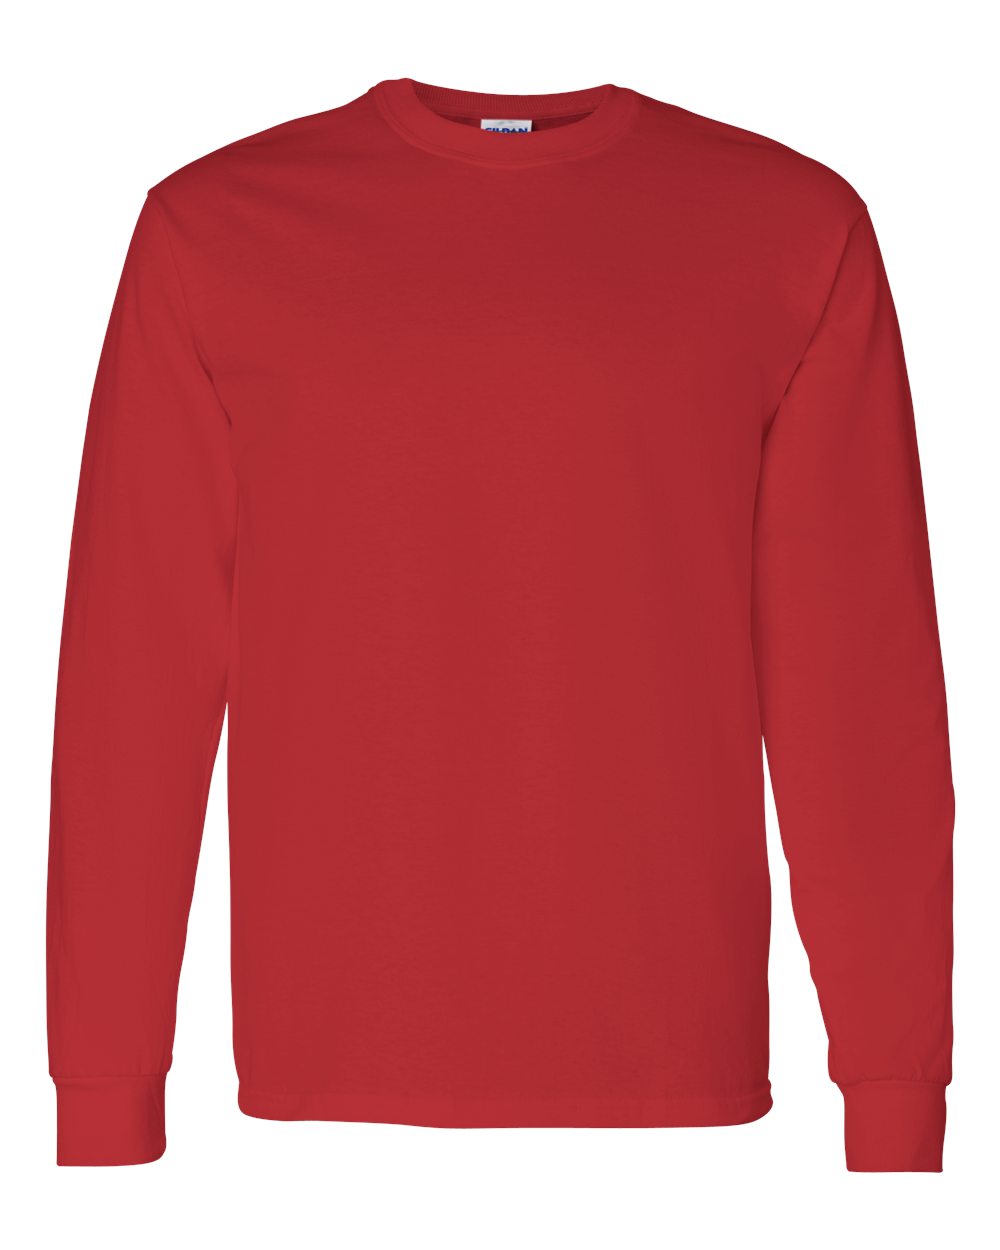 Pretreated Gildan 5400 Heavy Cotton Long Sleeve T-Shirt - Red